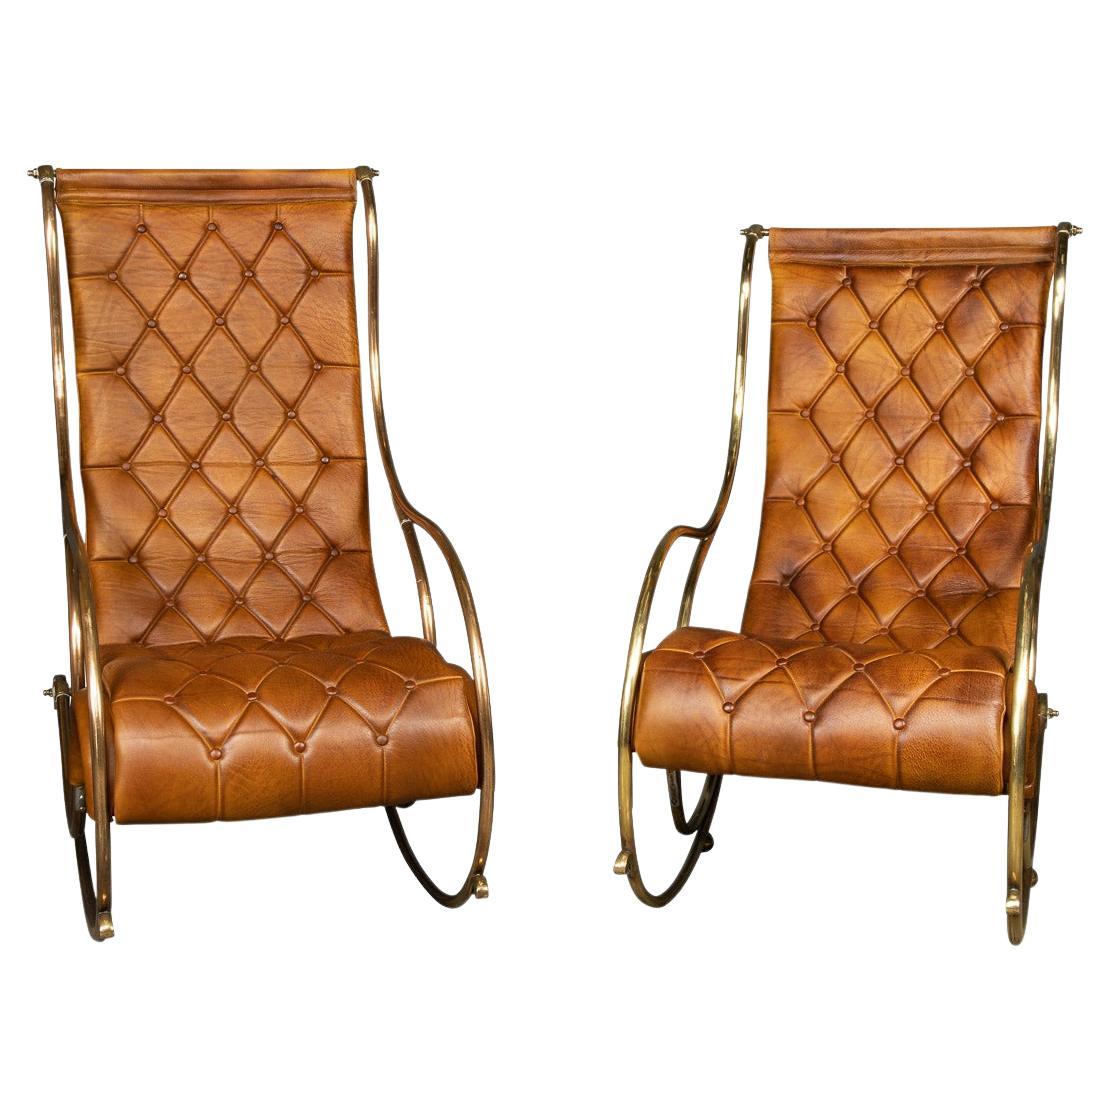 20th Century British Made Pair of Leather Rocking Chairs, c.1950